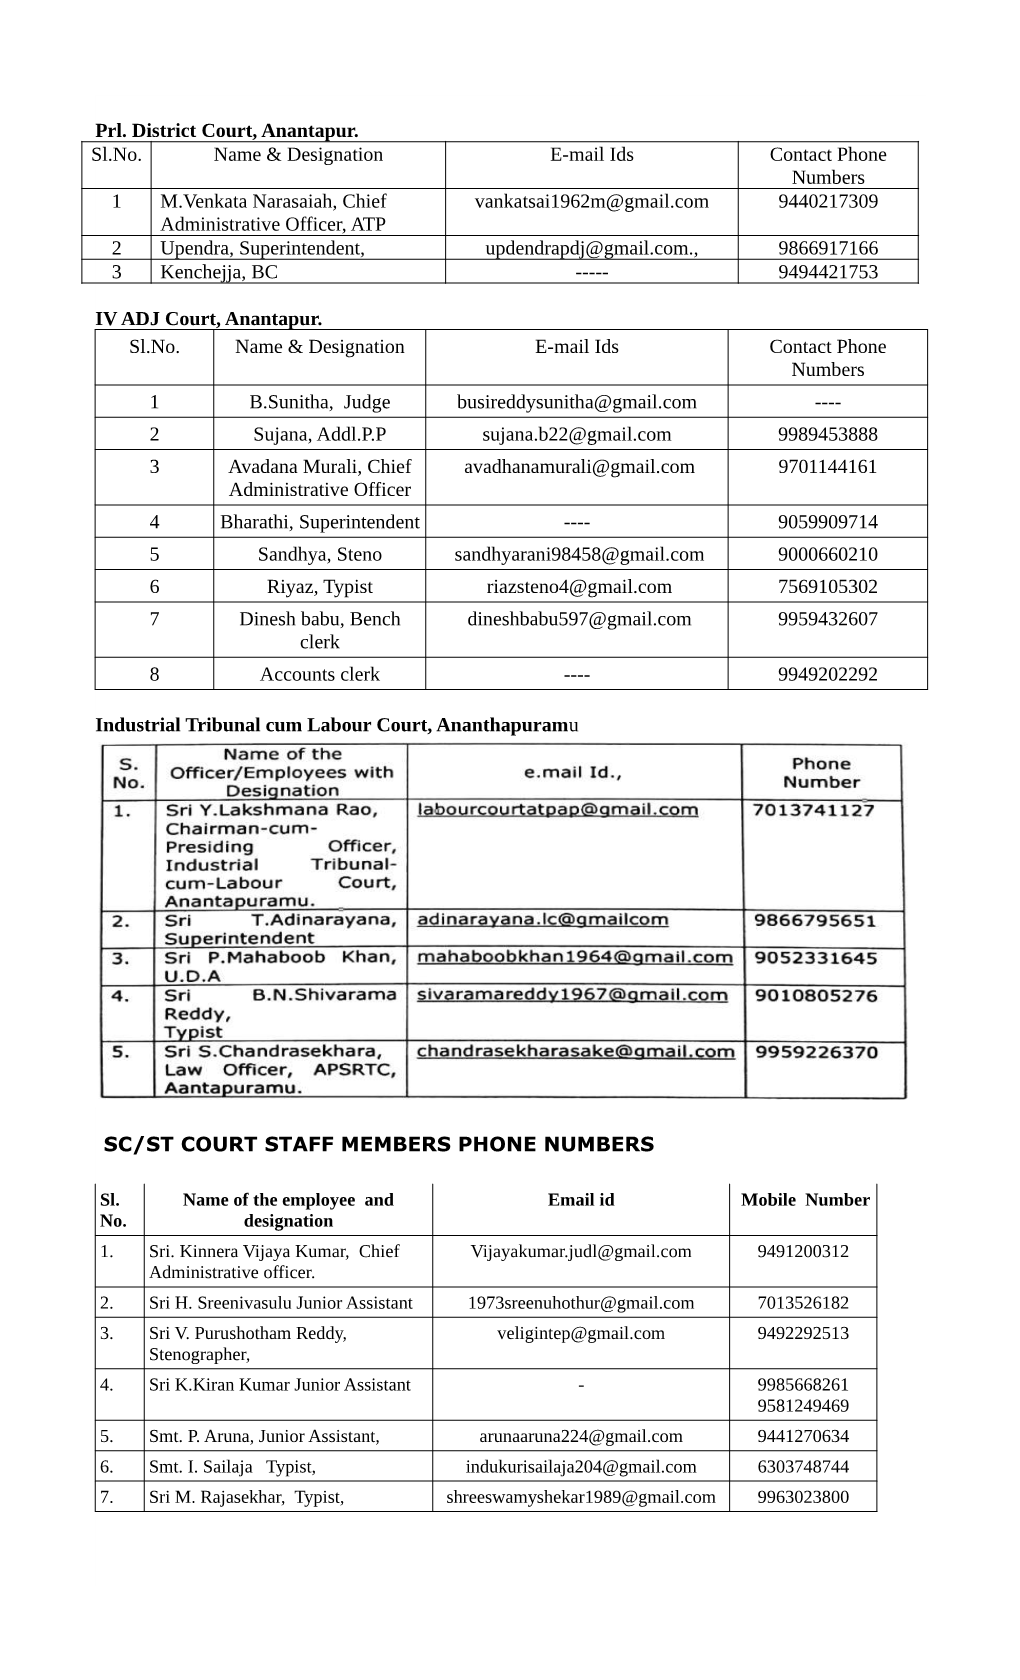 Prl. District Court, Anantapur. Sl.No. Name & Designation E-Mail Ids